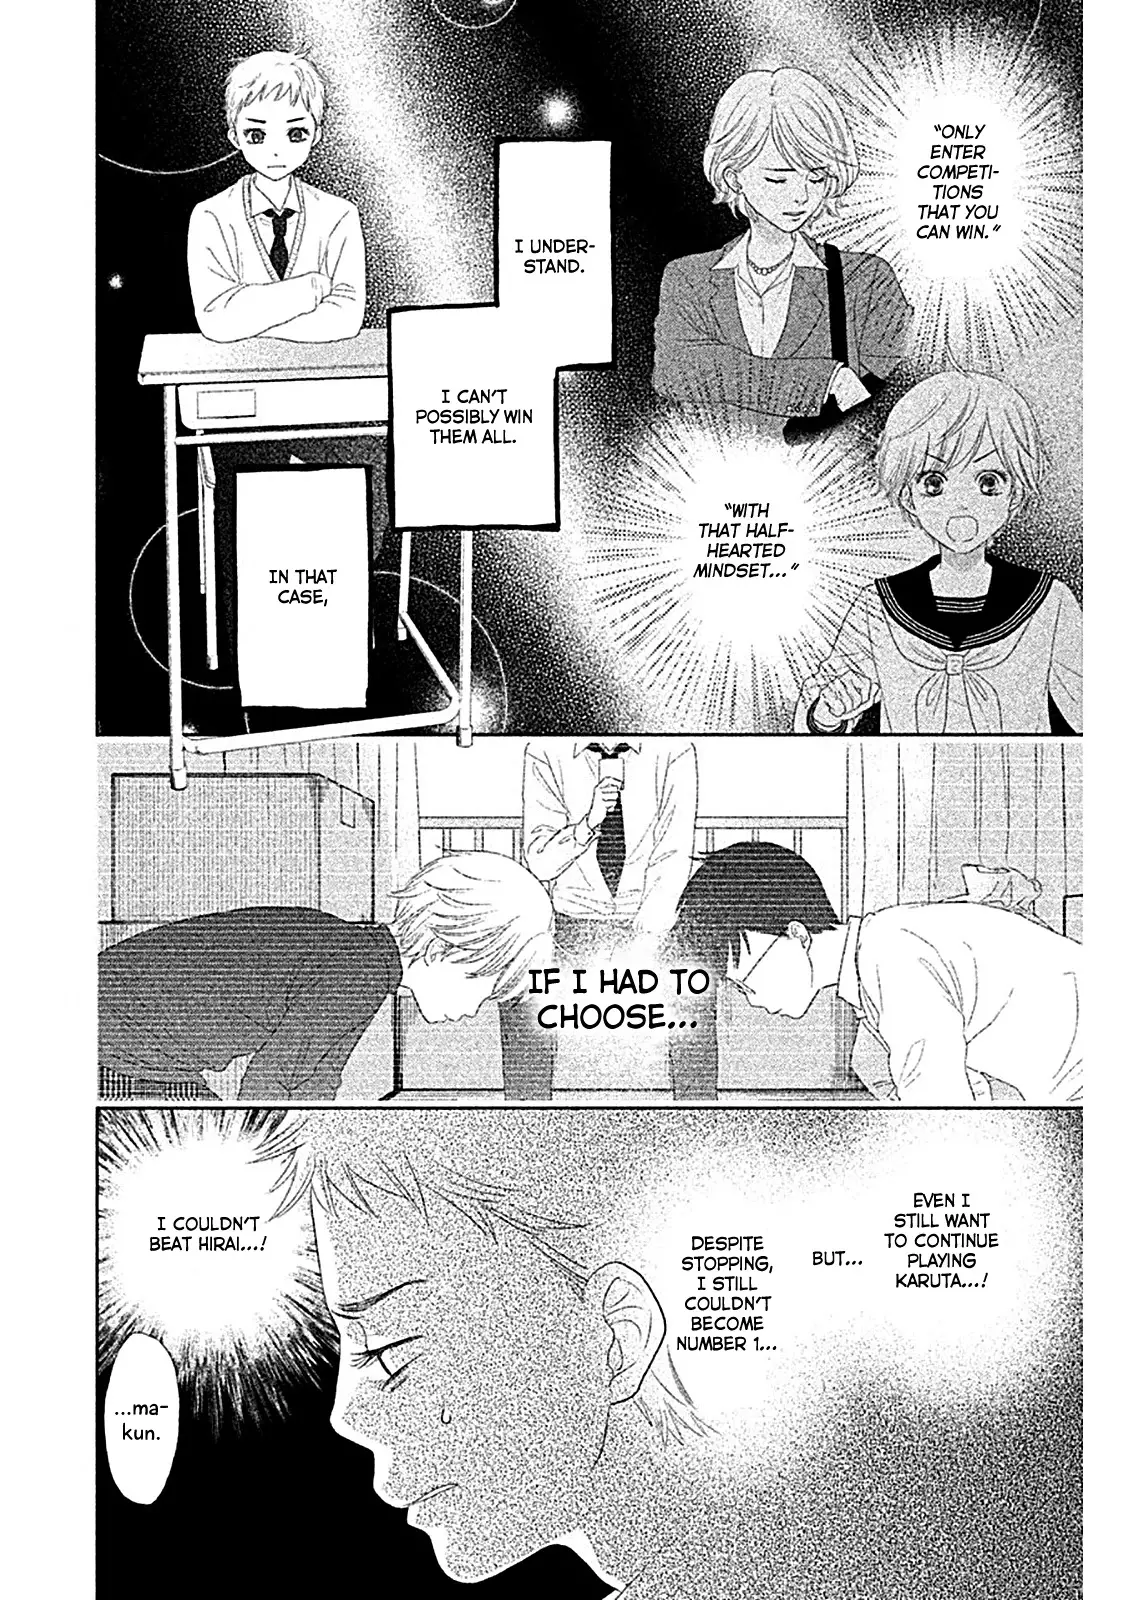 Chihayafuru: Middle School Arc - 4 page 3